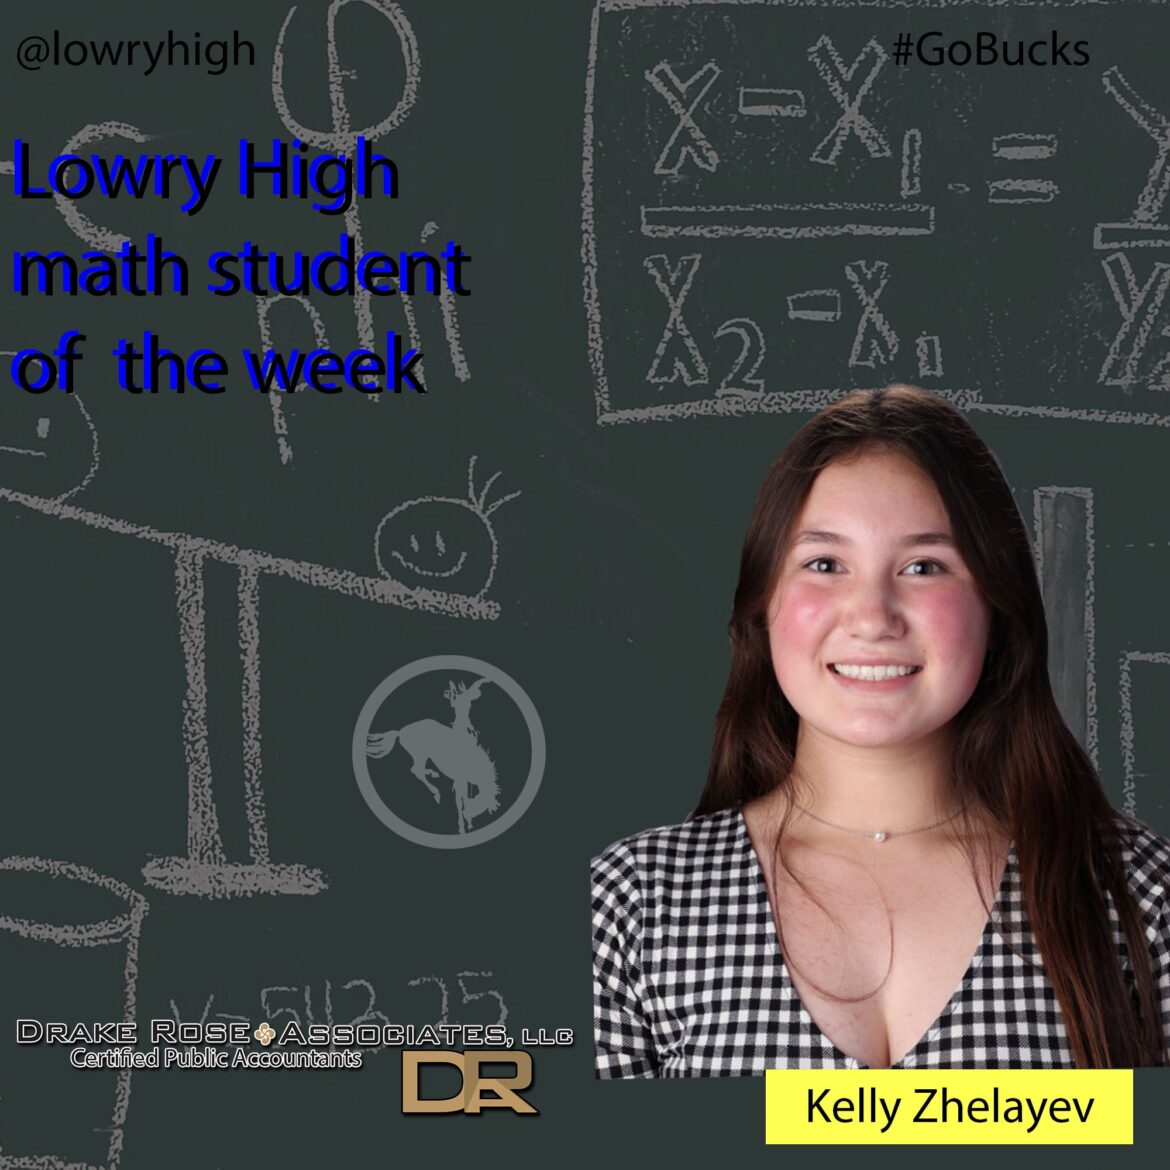 Kelly Zhelayev named Math Student of the Week